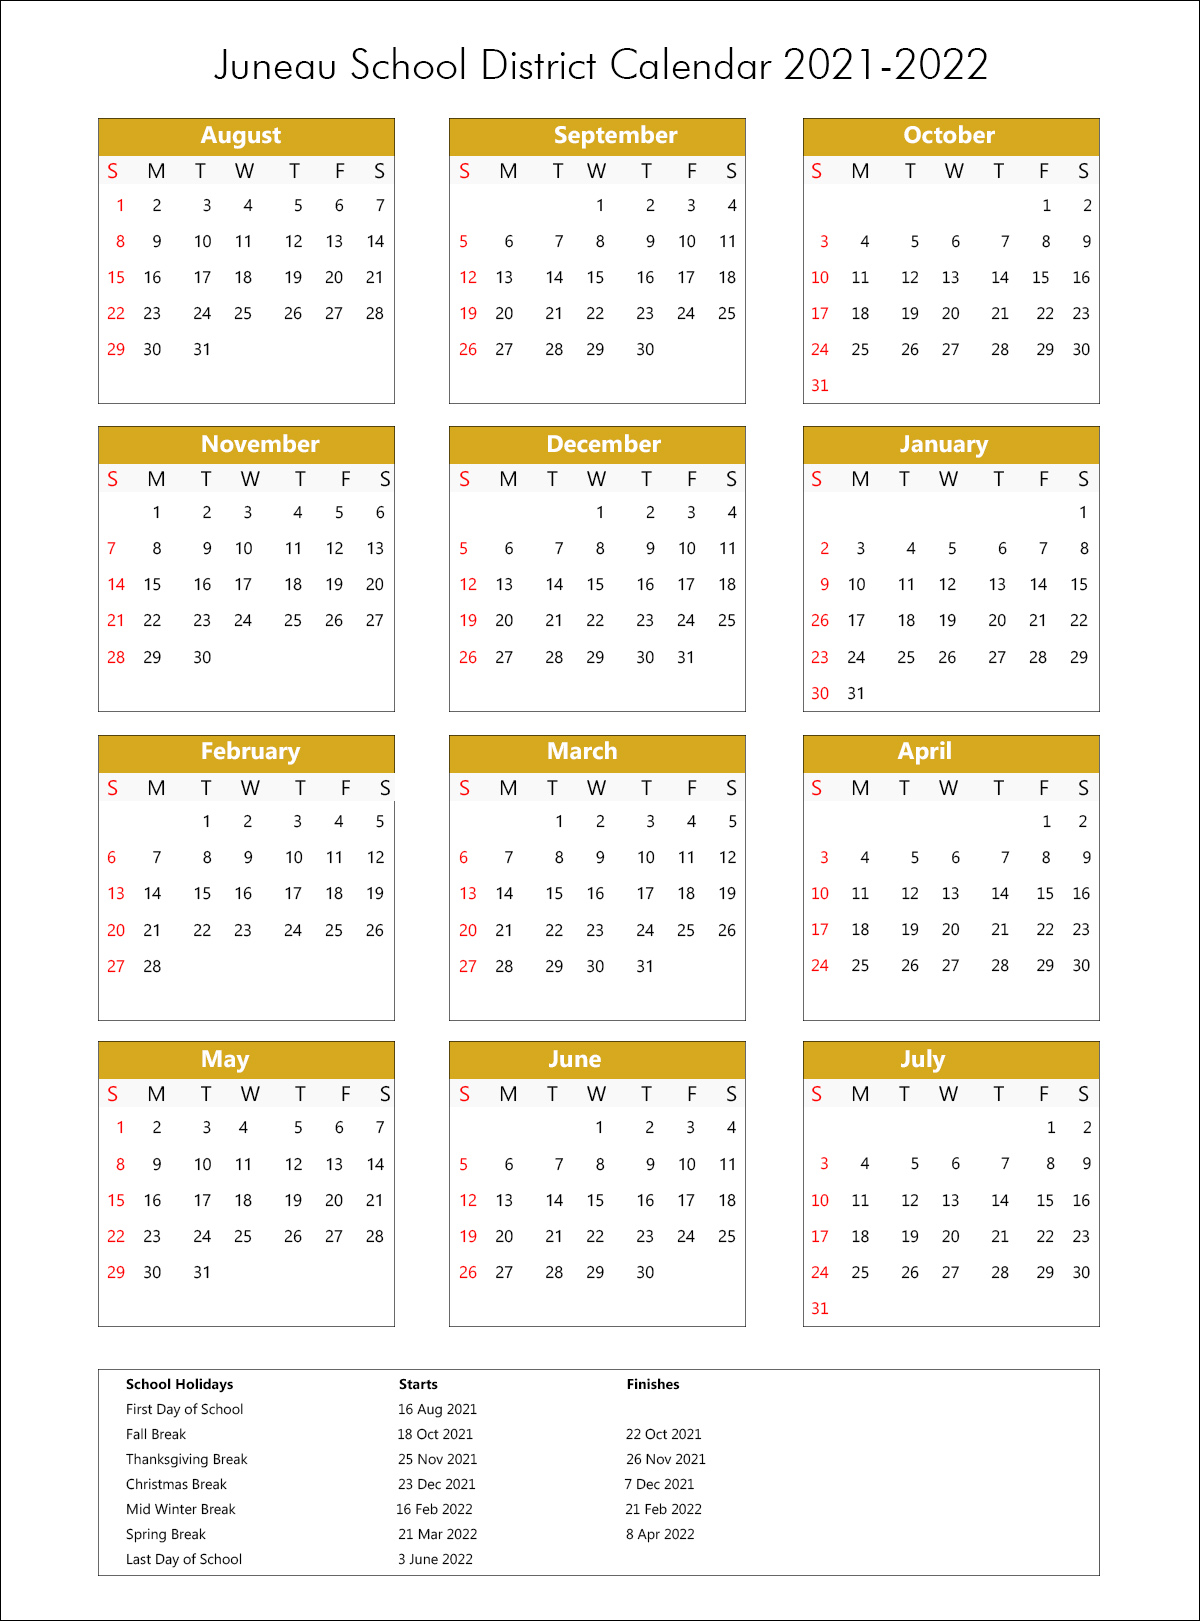 Juneau School District Calendar 2021